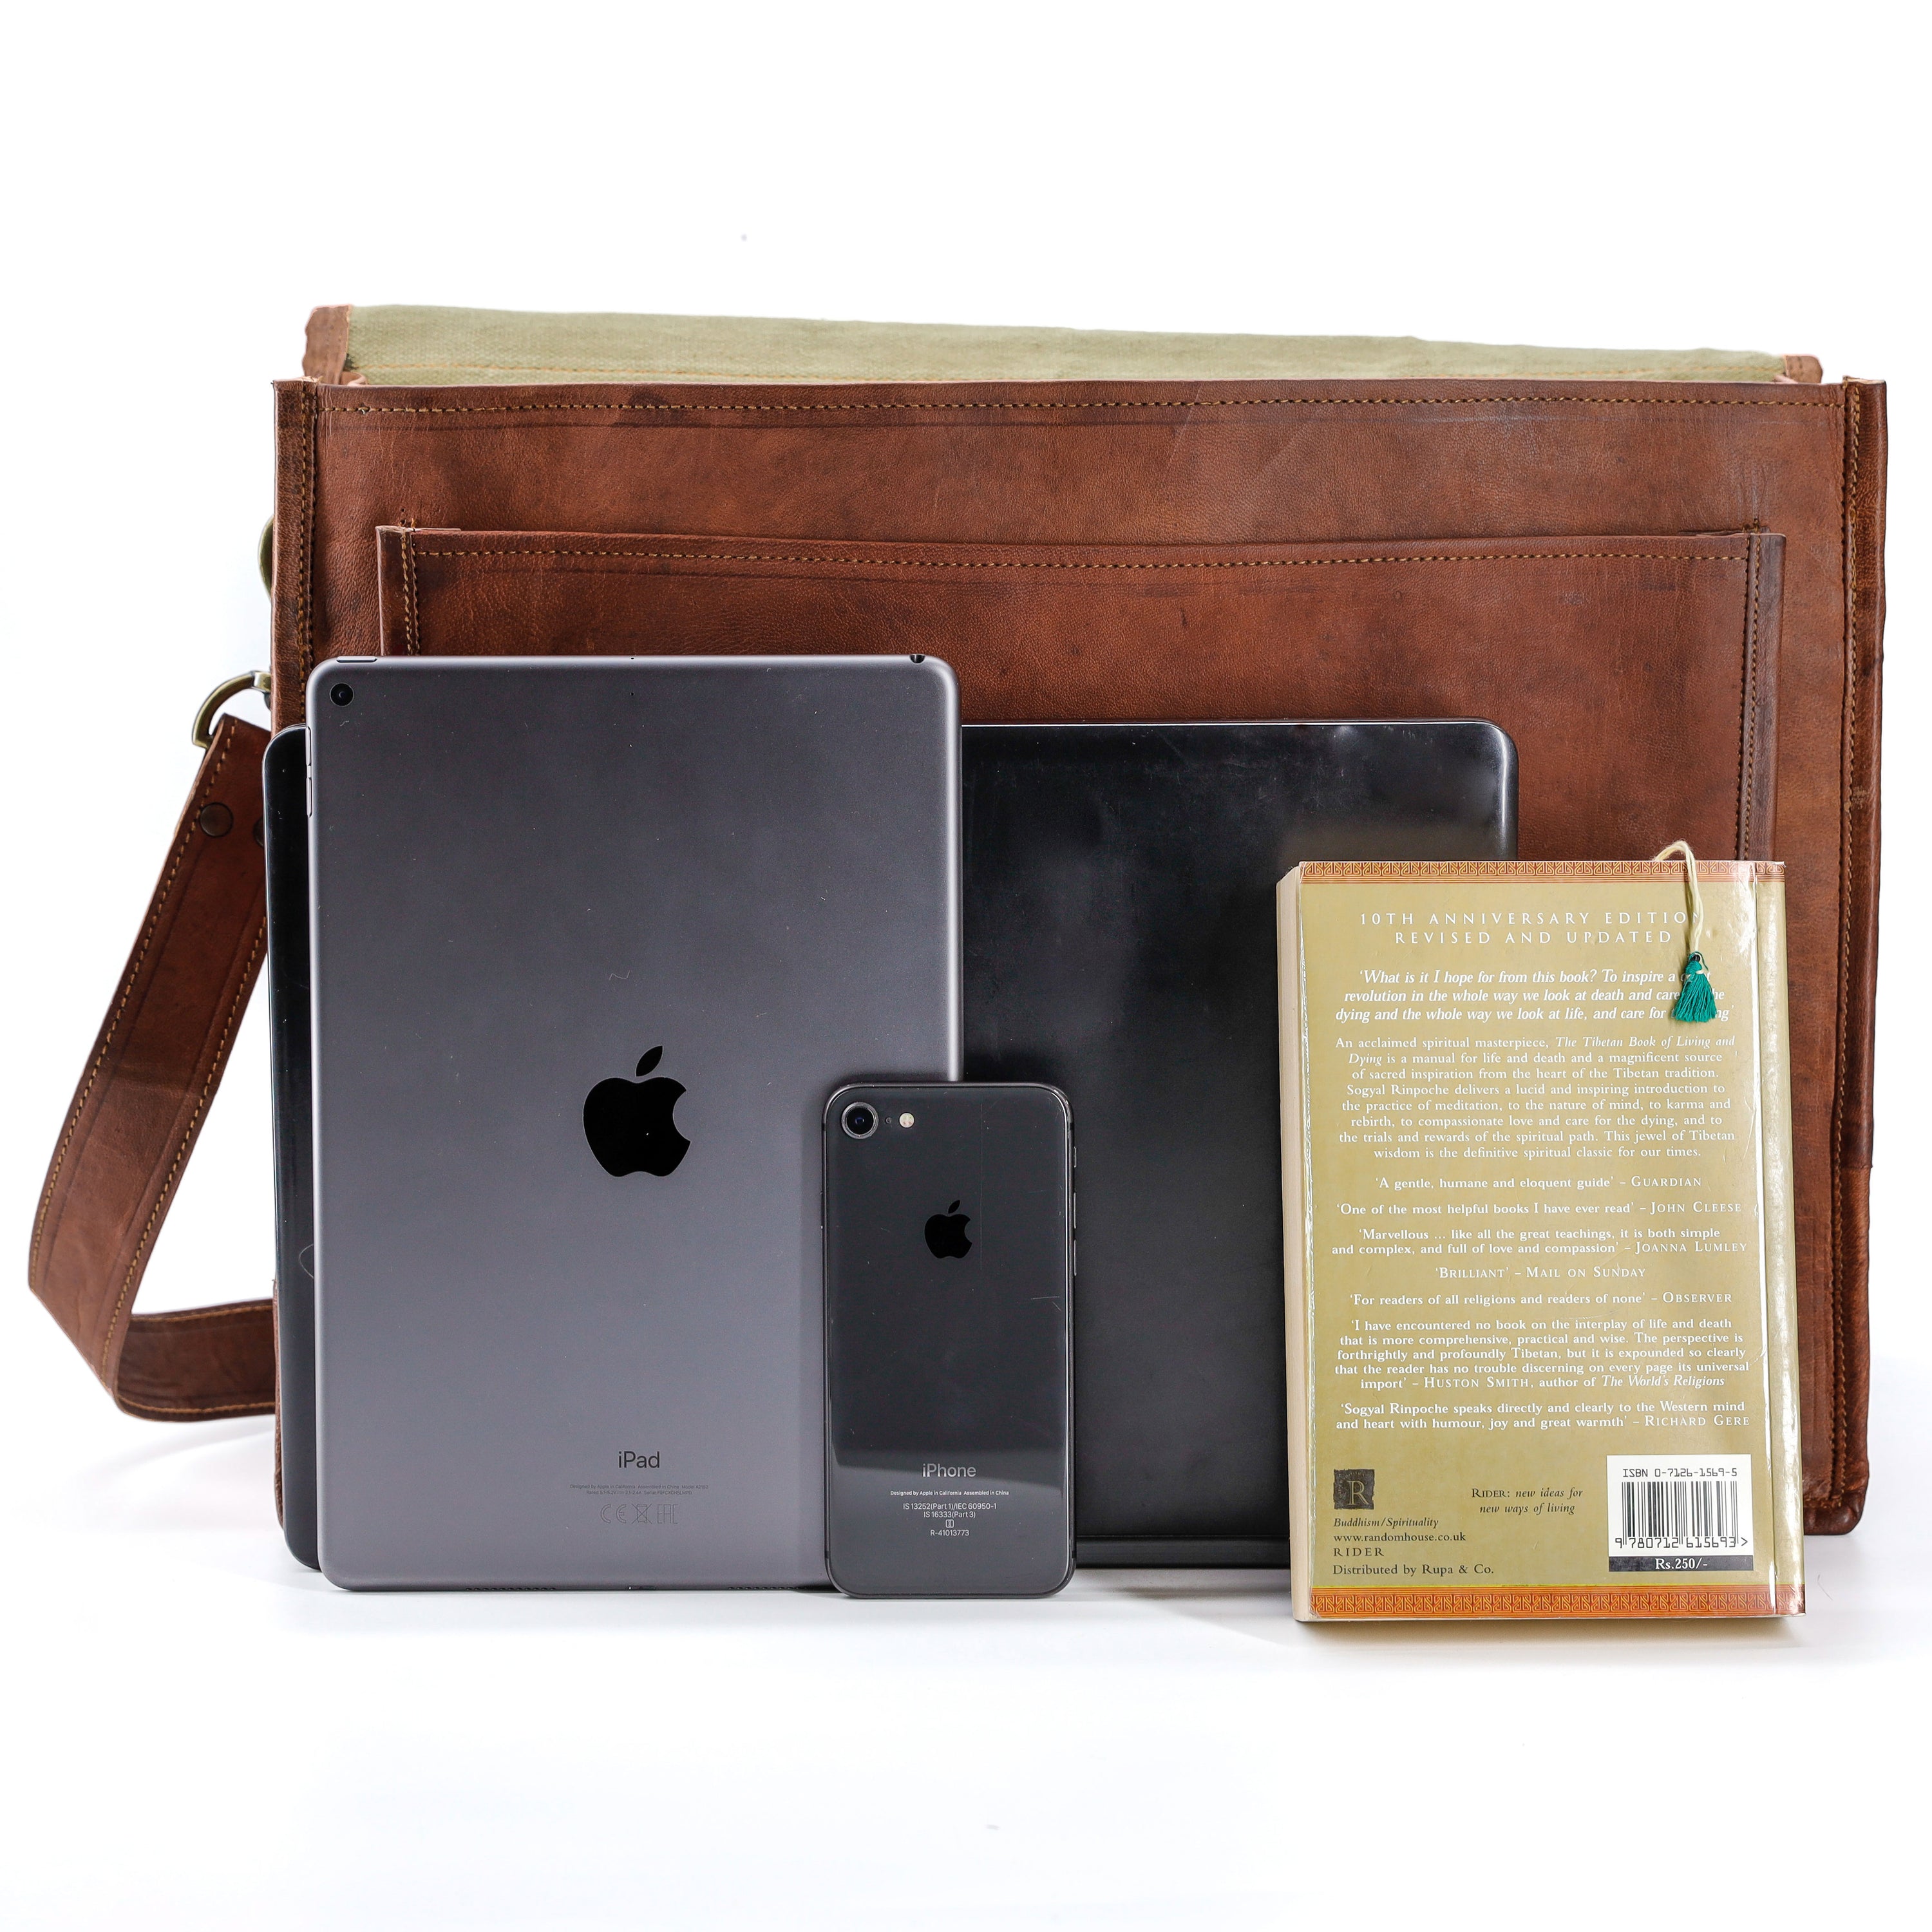 Leather Bag with Adjustable Strap for MacBook MacBook Pro 14 / Camel